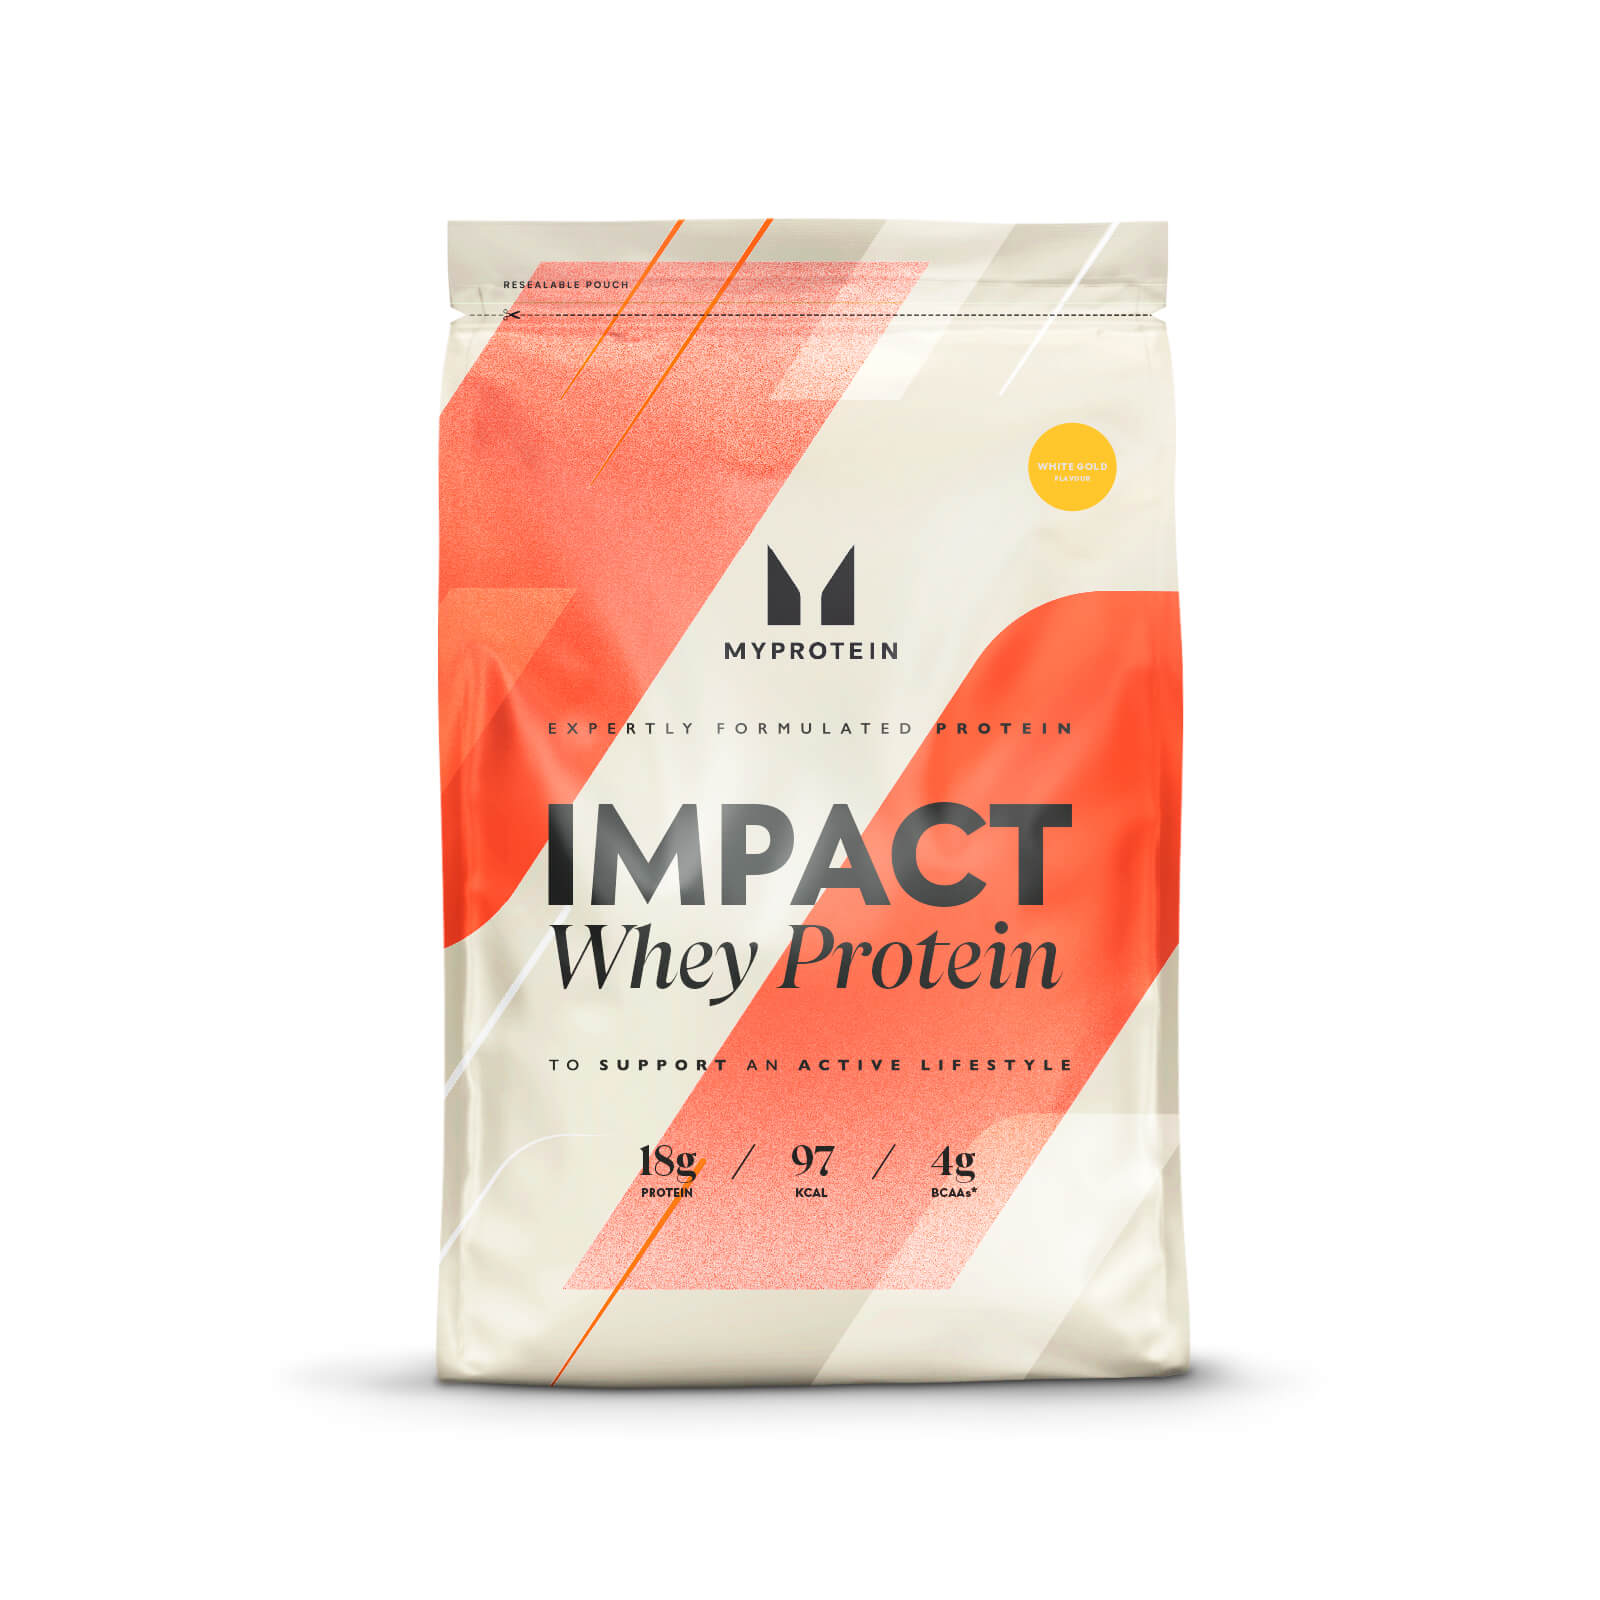 Image of Impact Whey Protein - Gusto oro bianco - 1kg - White Gold